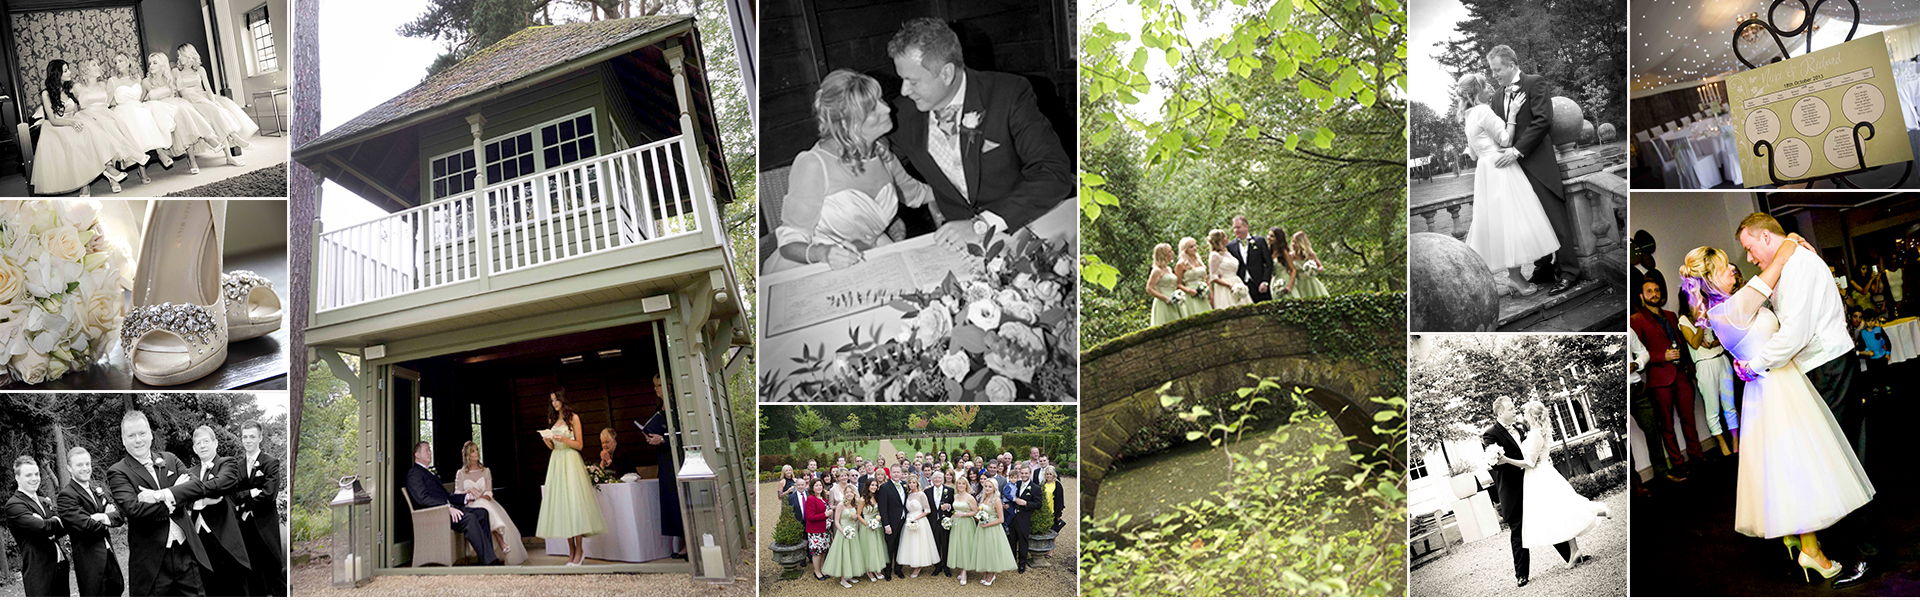 High quality Wedding Photography, Natural Wedding Photography, Hogarths